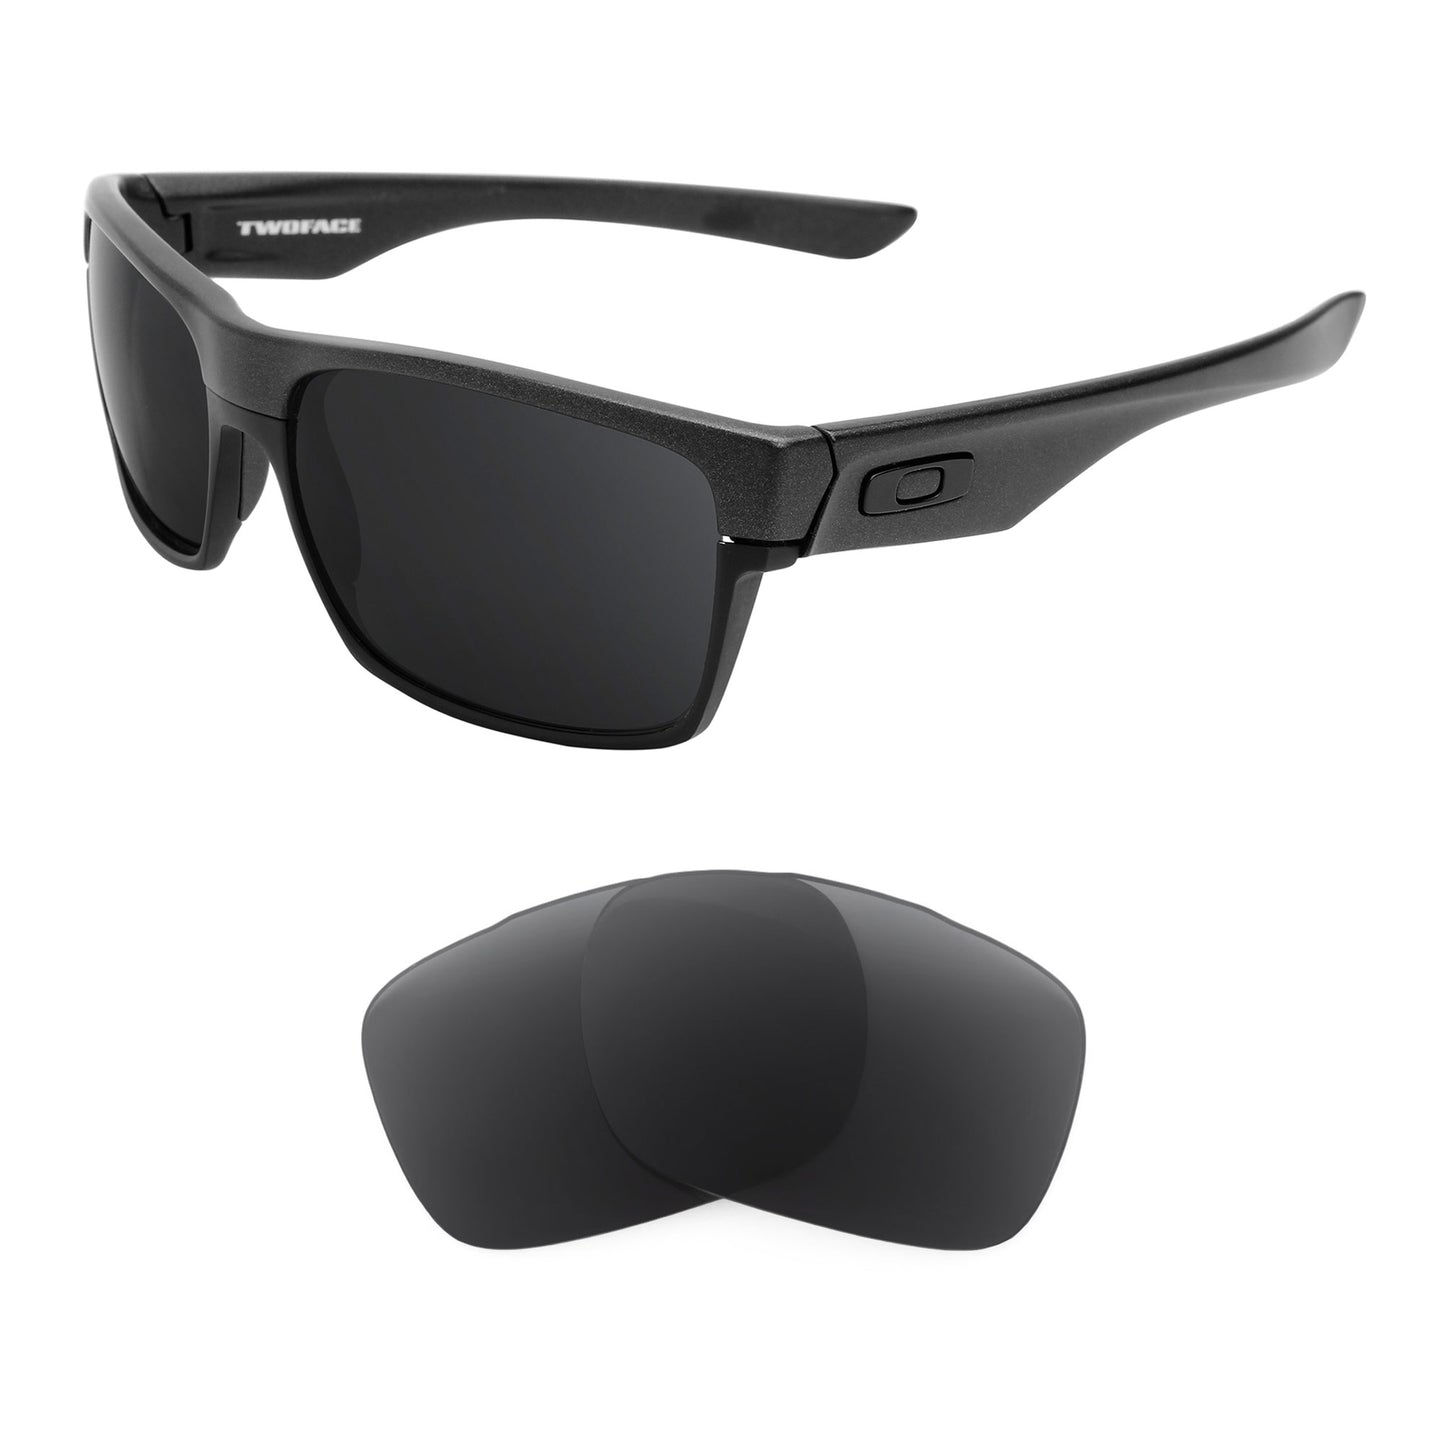 Oakley TwoFace (Low Bridge Fit) sunglasses with replacement lenses